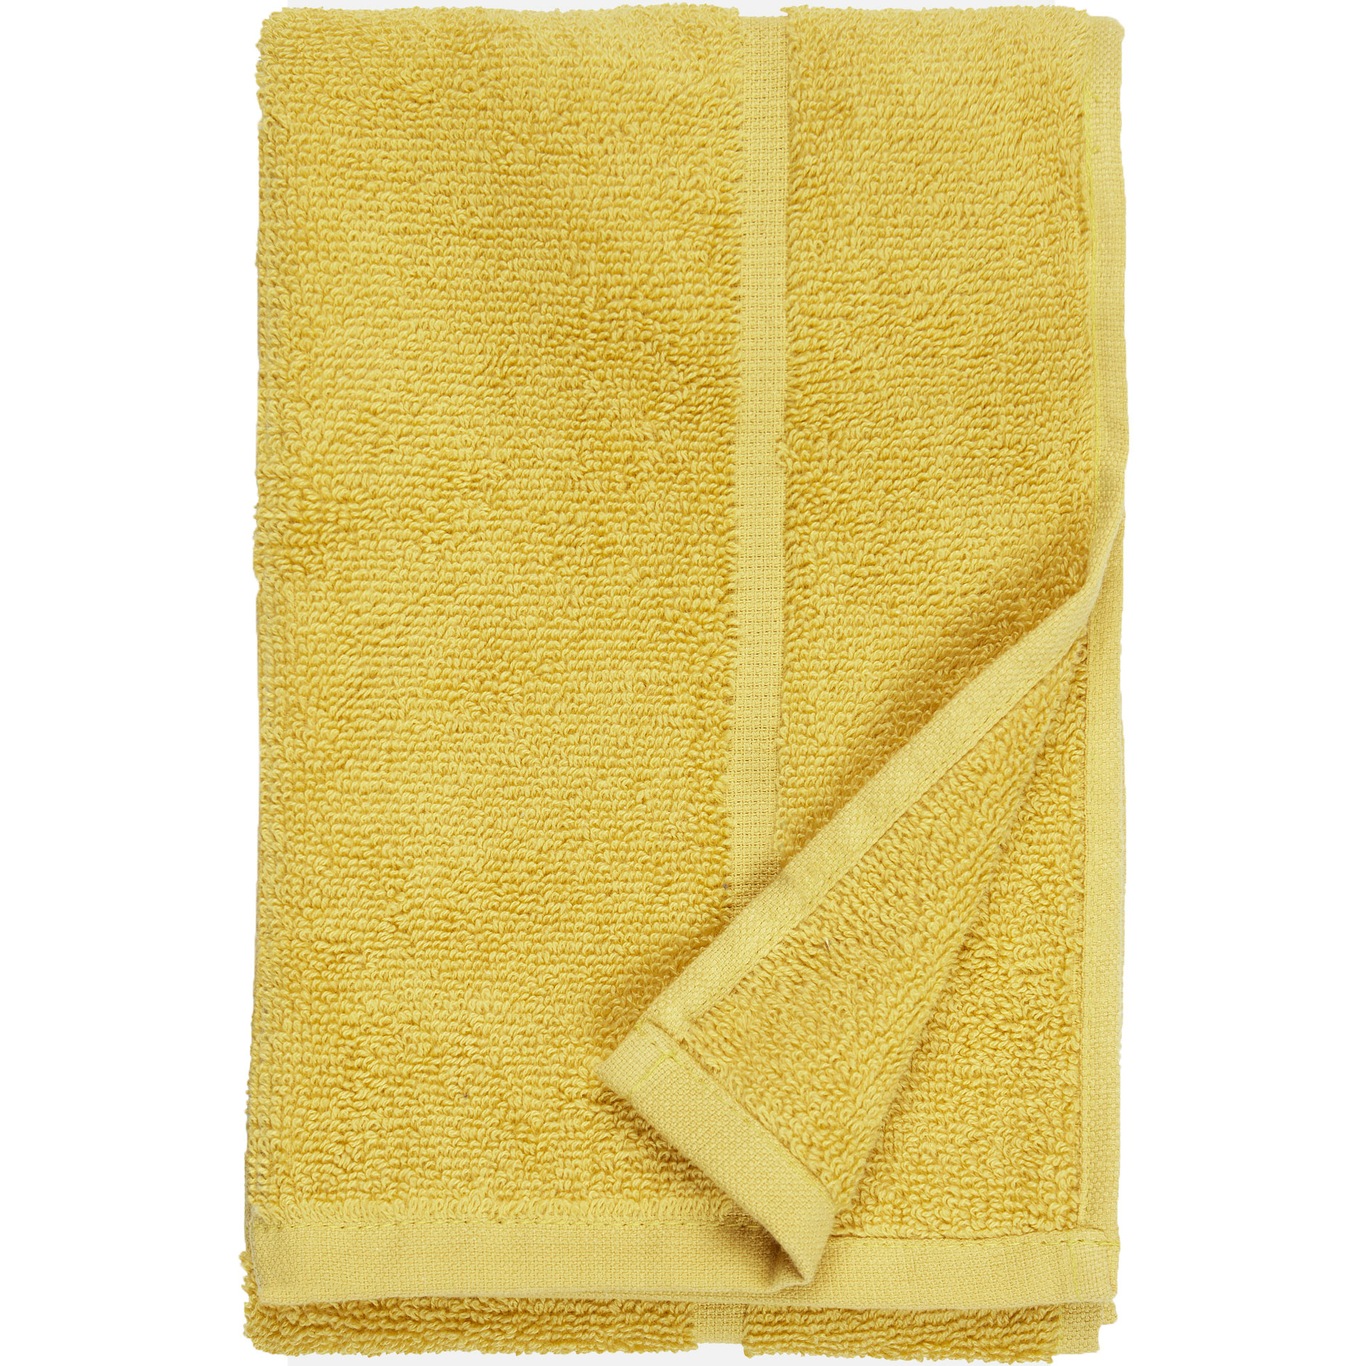 Tiiliskivi Guest Towel 30x50 cm, Ochre